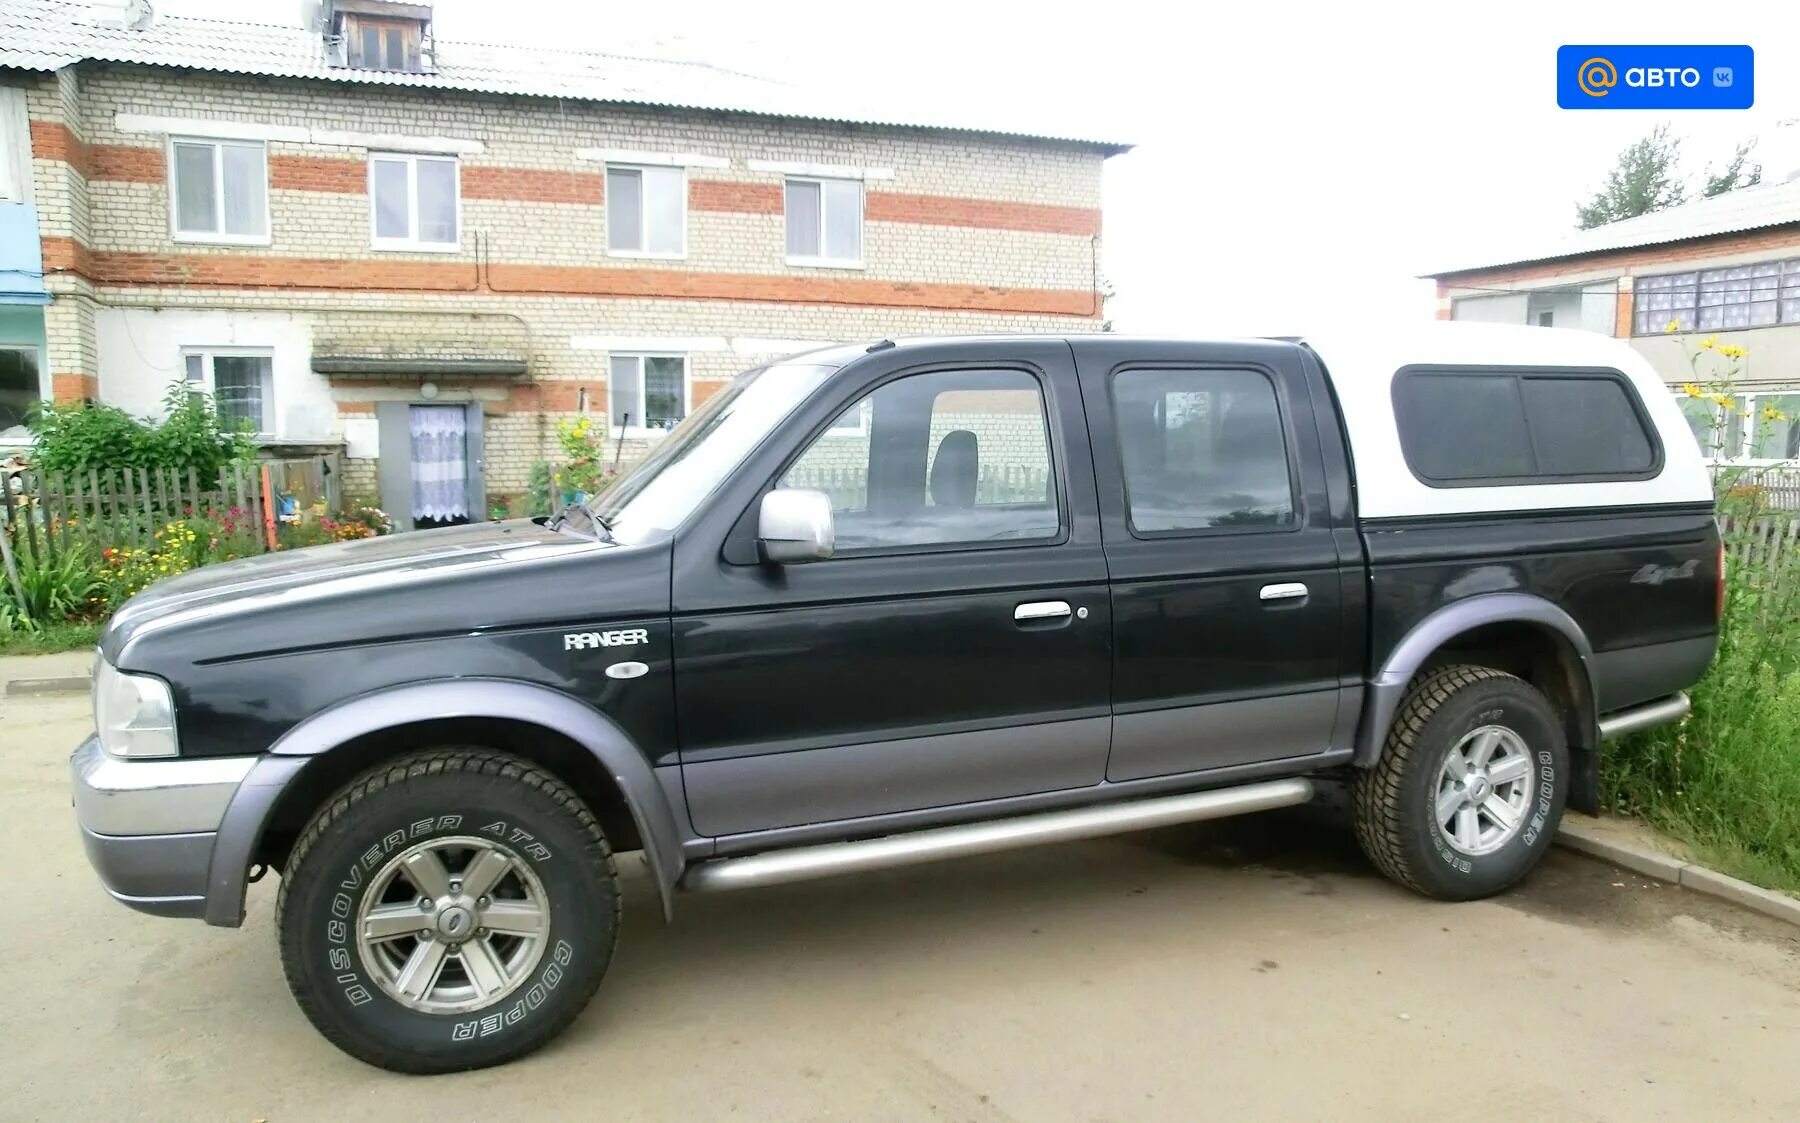 Ford Ranger 2004. Ford Ranger 2004 года. Ford Ranger 2004 серебро. Ford Ranger 2.5 МТ, 2004,. Механик пикап